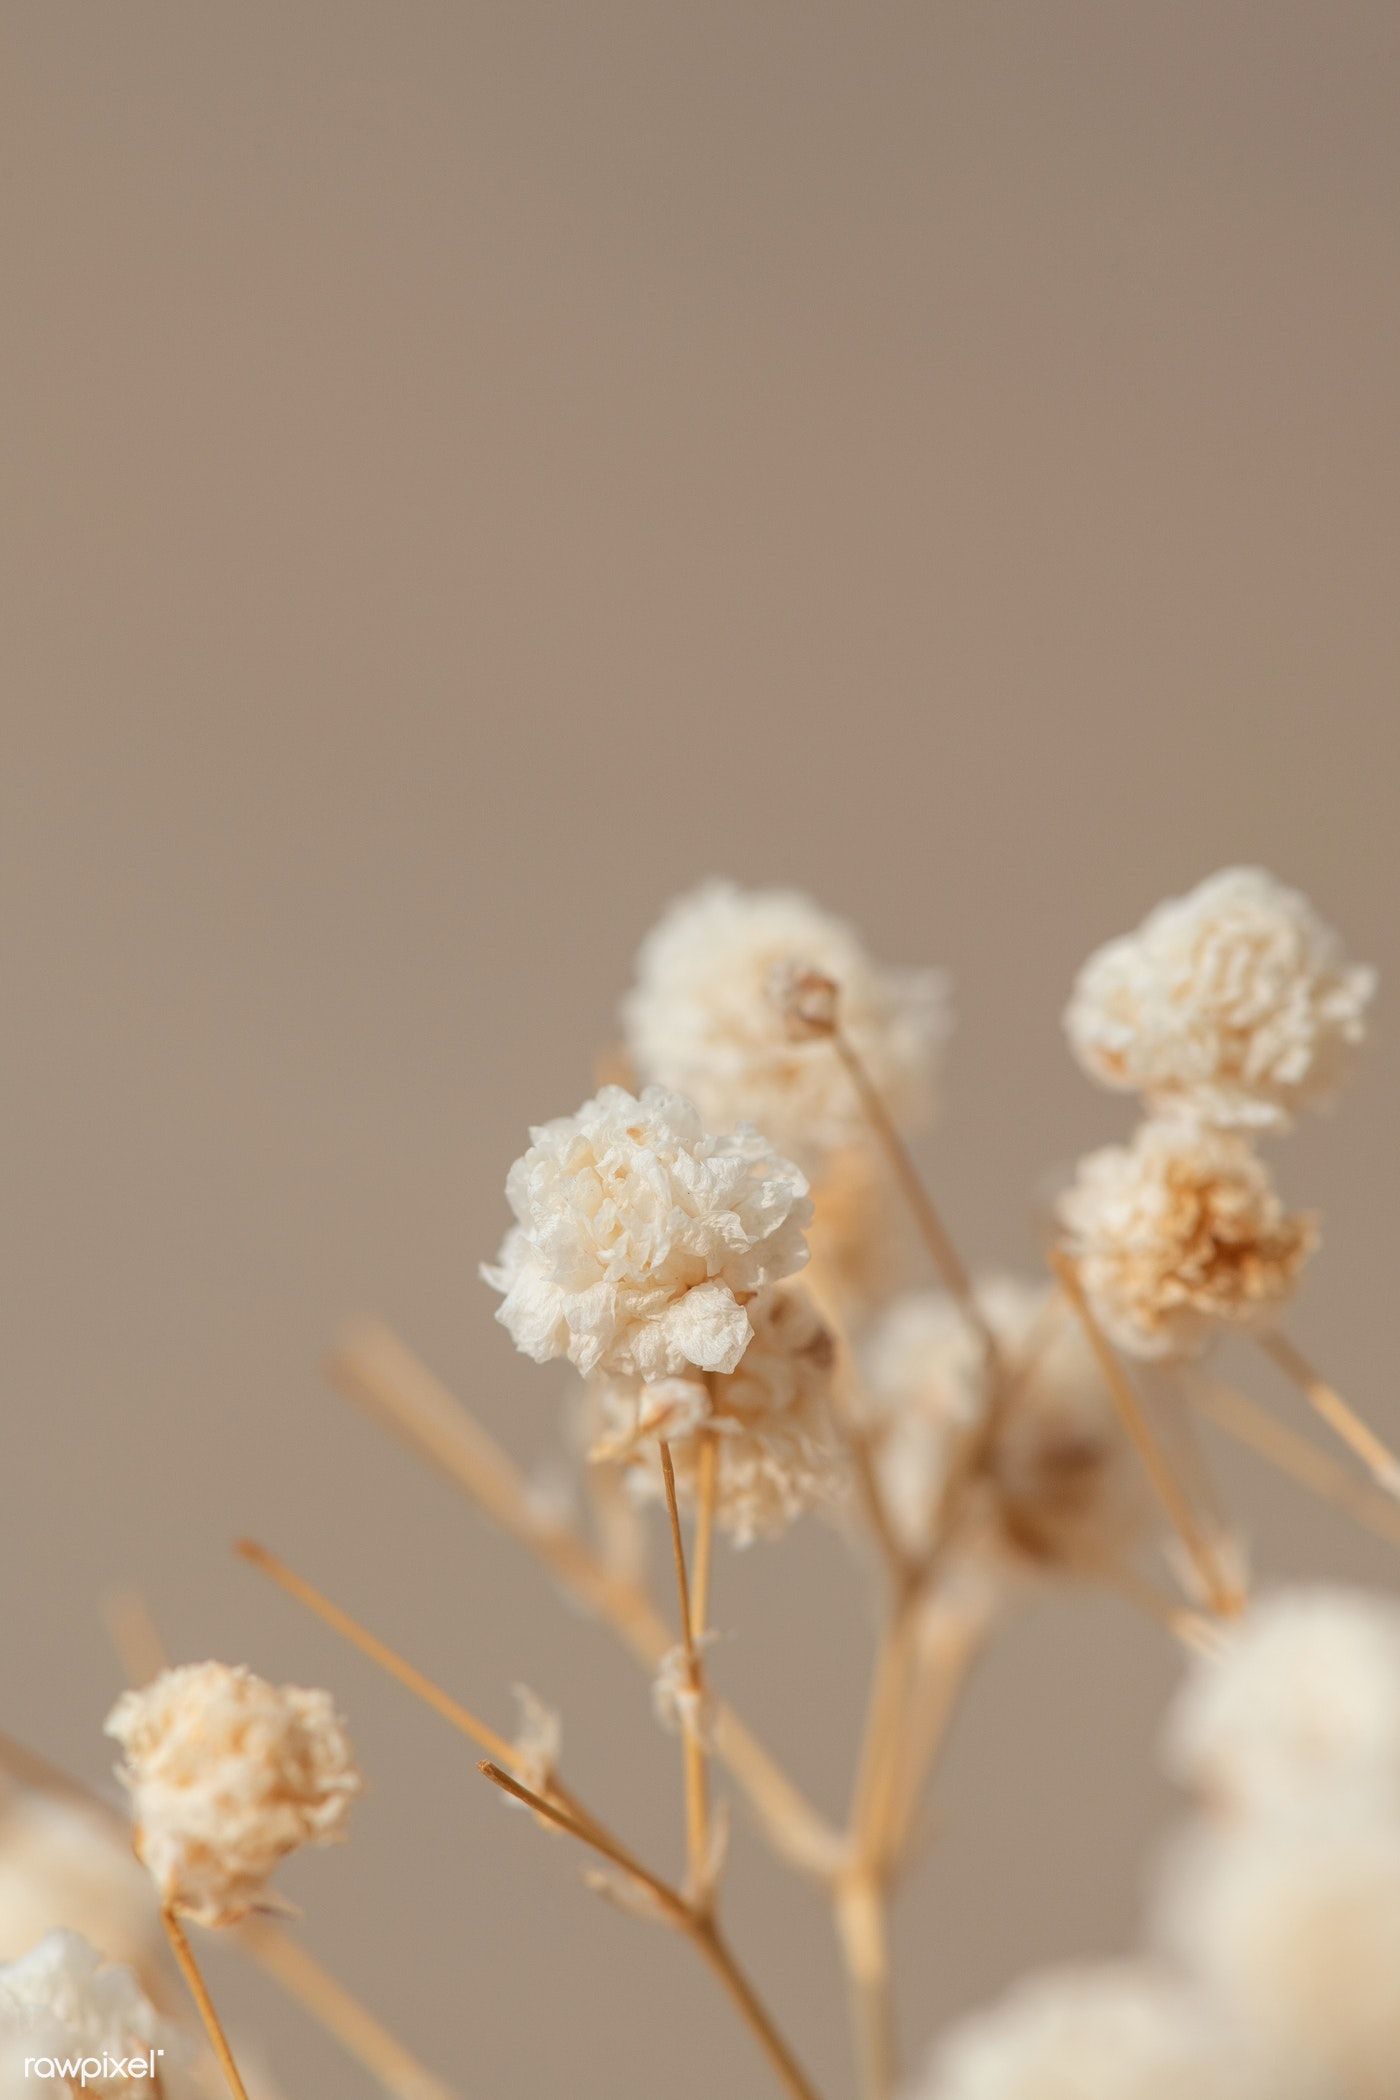 Dried gypsophila flowers macro shot. premium image / Teddy Rawpixel. Flower aesthetic, Gypsophila flower, Dried flowers